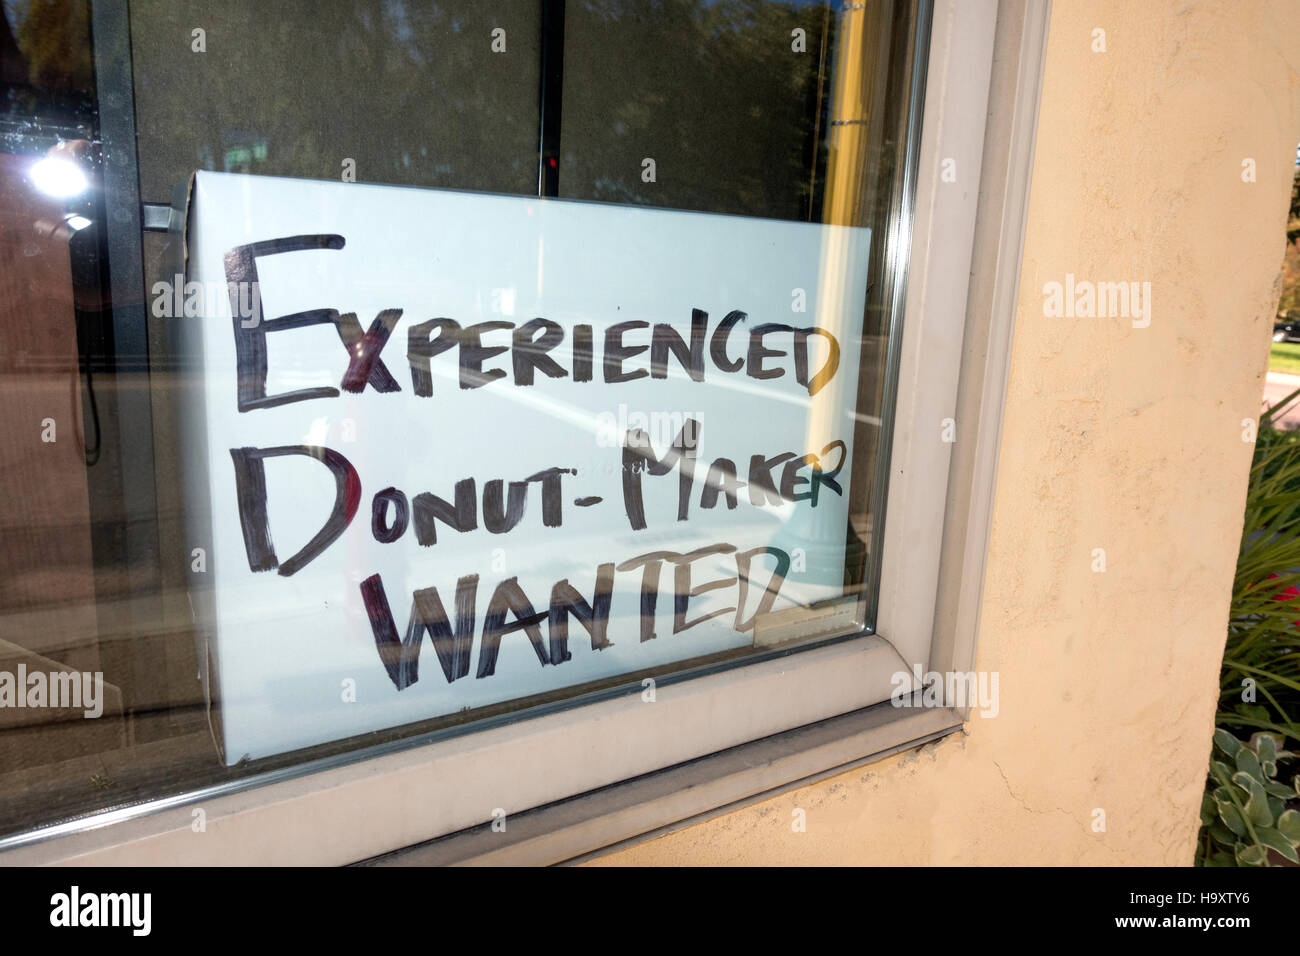 Experienced Dounut-Maker Wanted Sign in the iconic Mel-O-Glaze bakery window. Minneapolis Minnesota MN USA Stock Photo